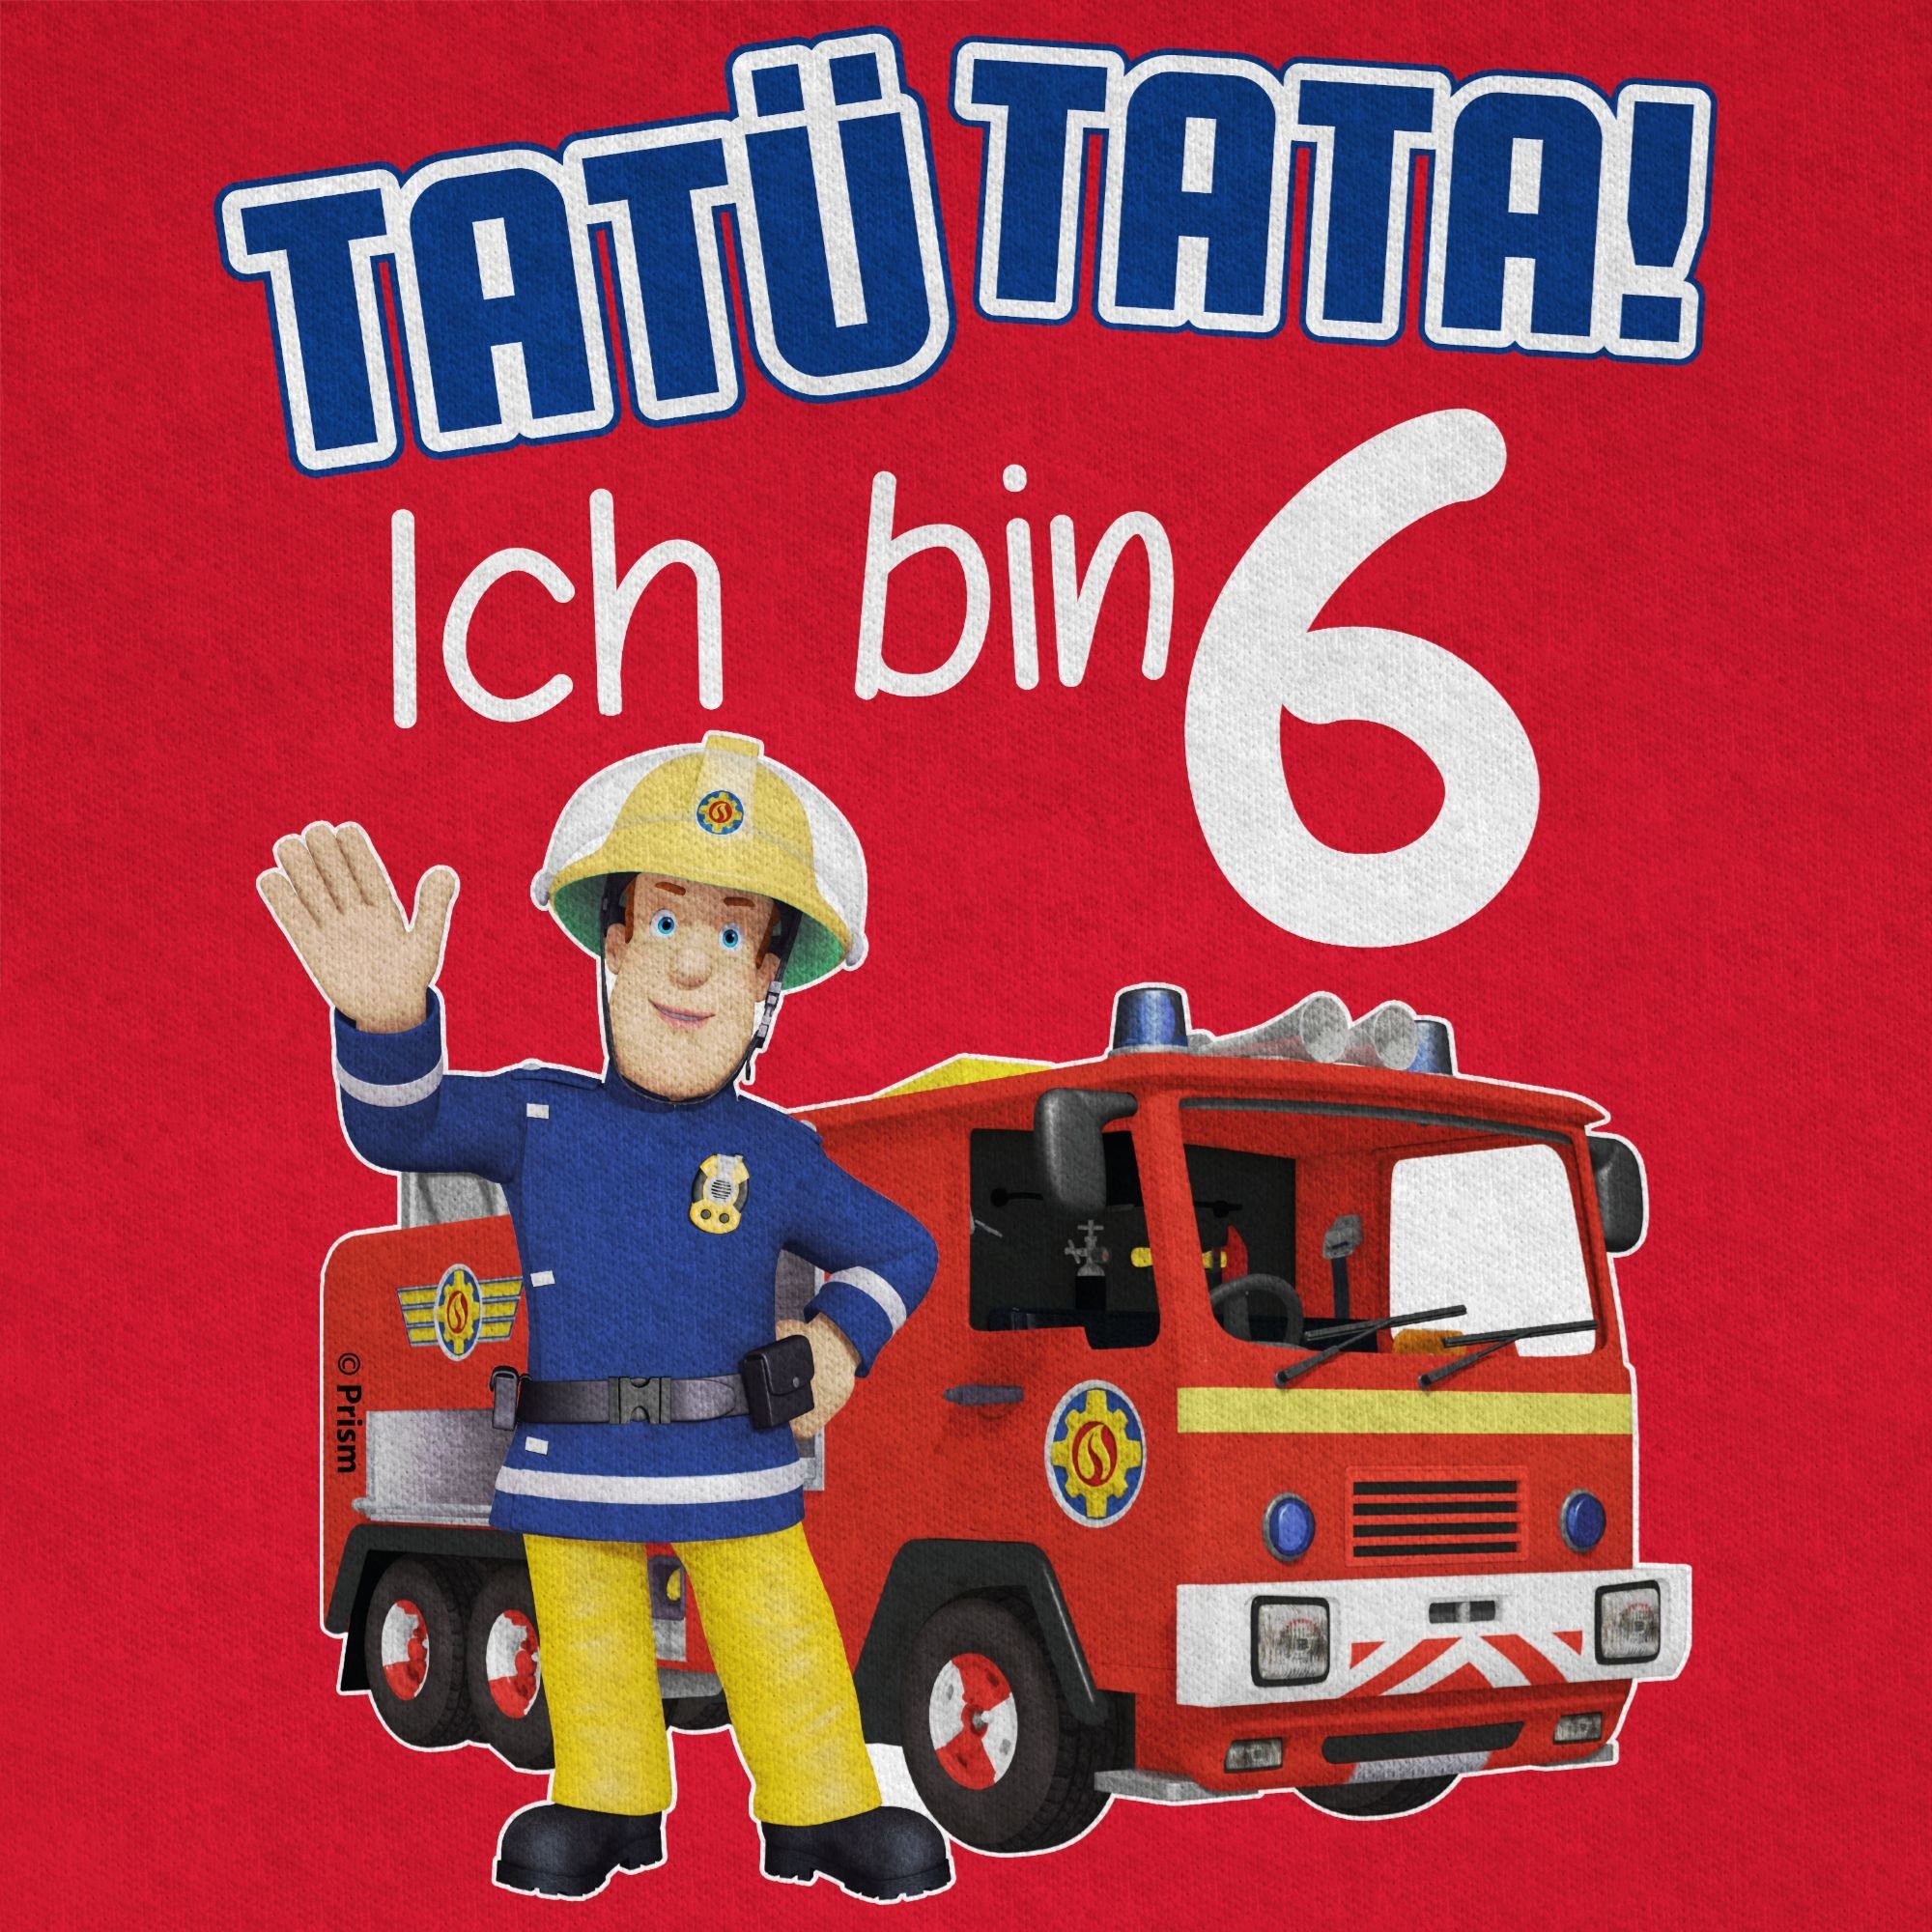 Sam bin Rot - Shirtracer Tatü Ich Feuerwehrmann T-Shirt 6 02 blau Tata! Jungen